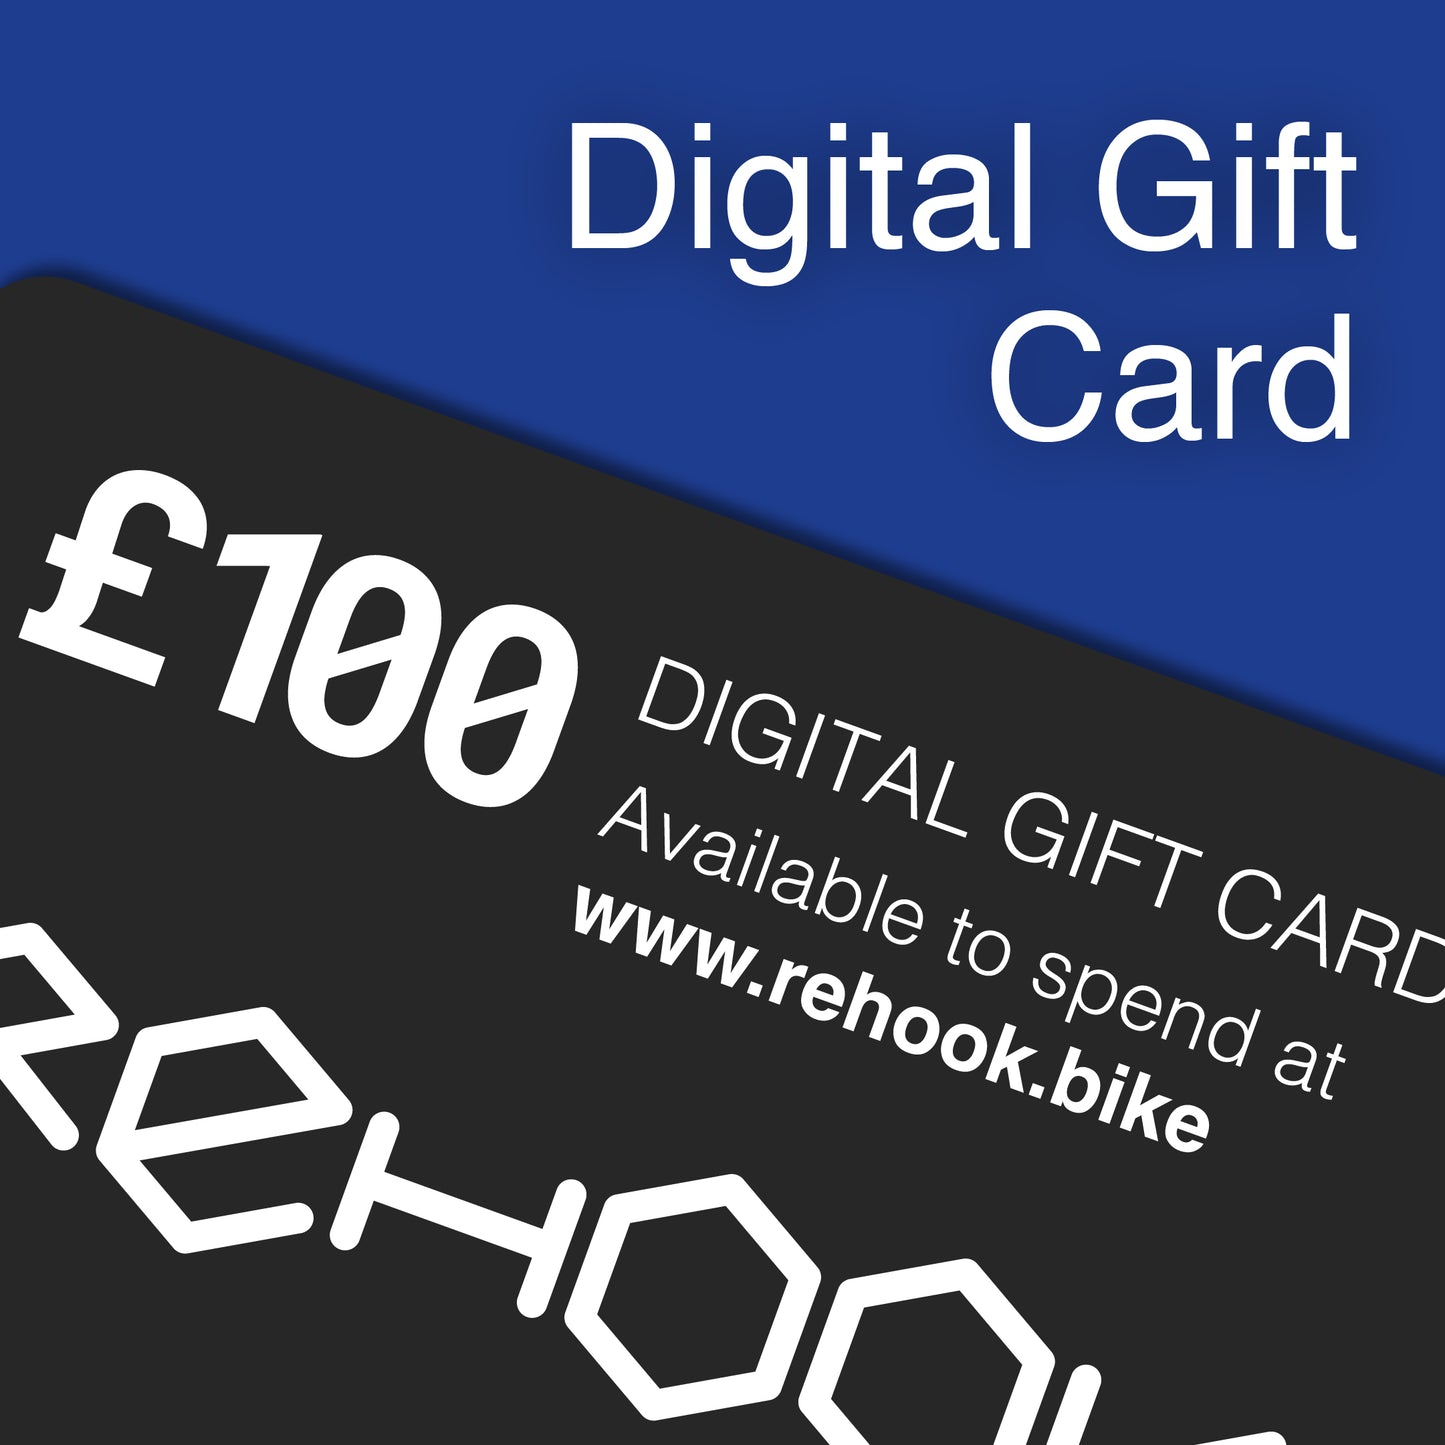 Rehook Digital Gift Card